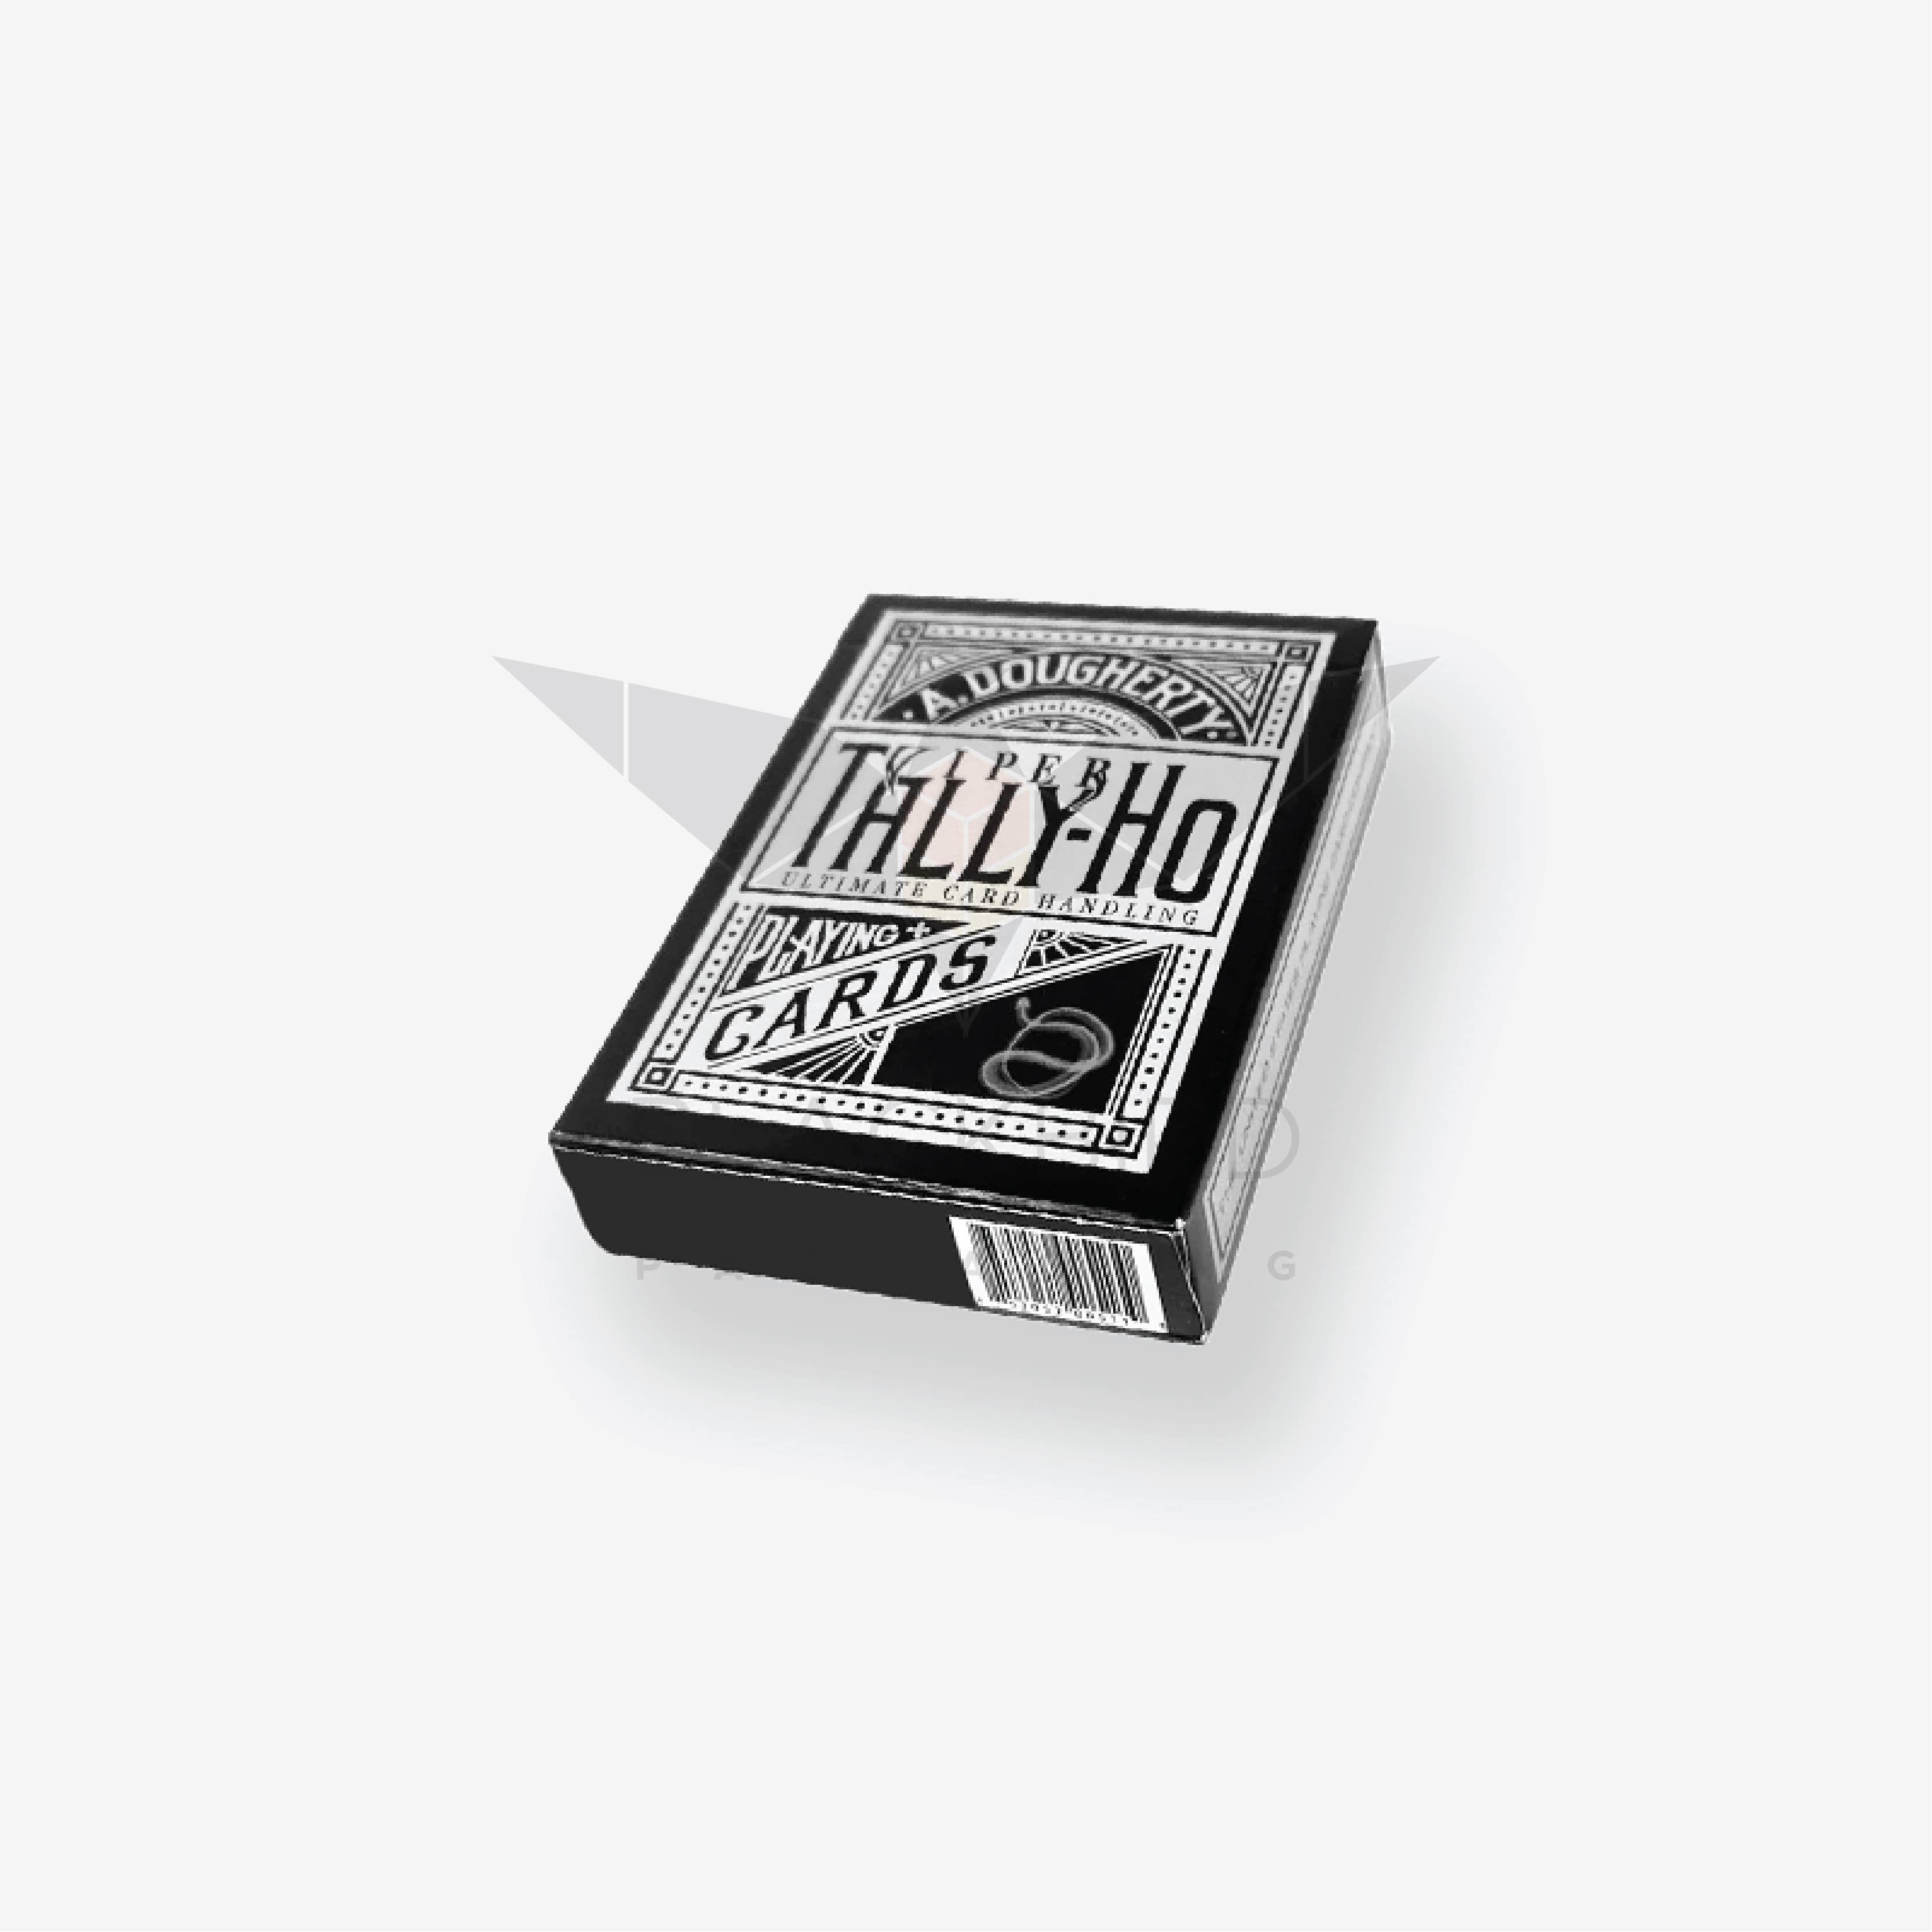 Custom Printed Playing Card Boxes